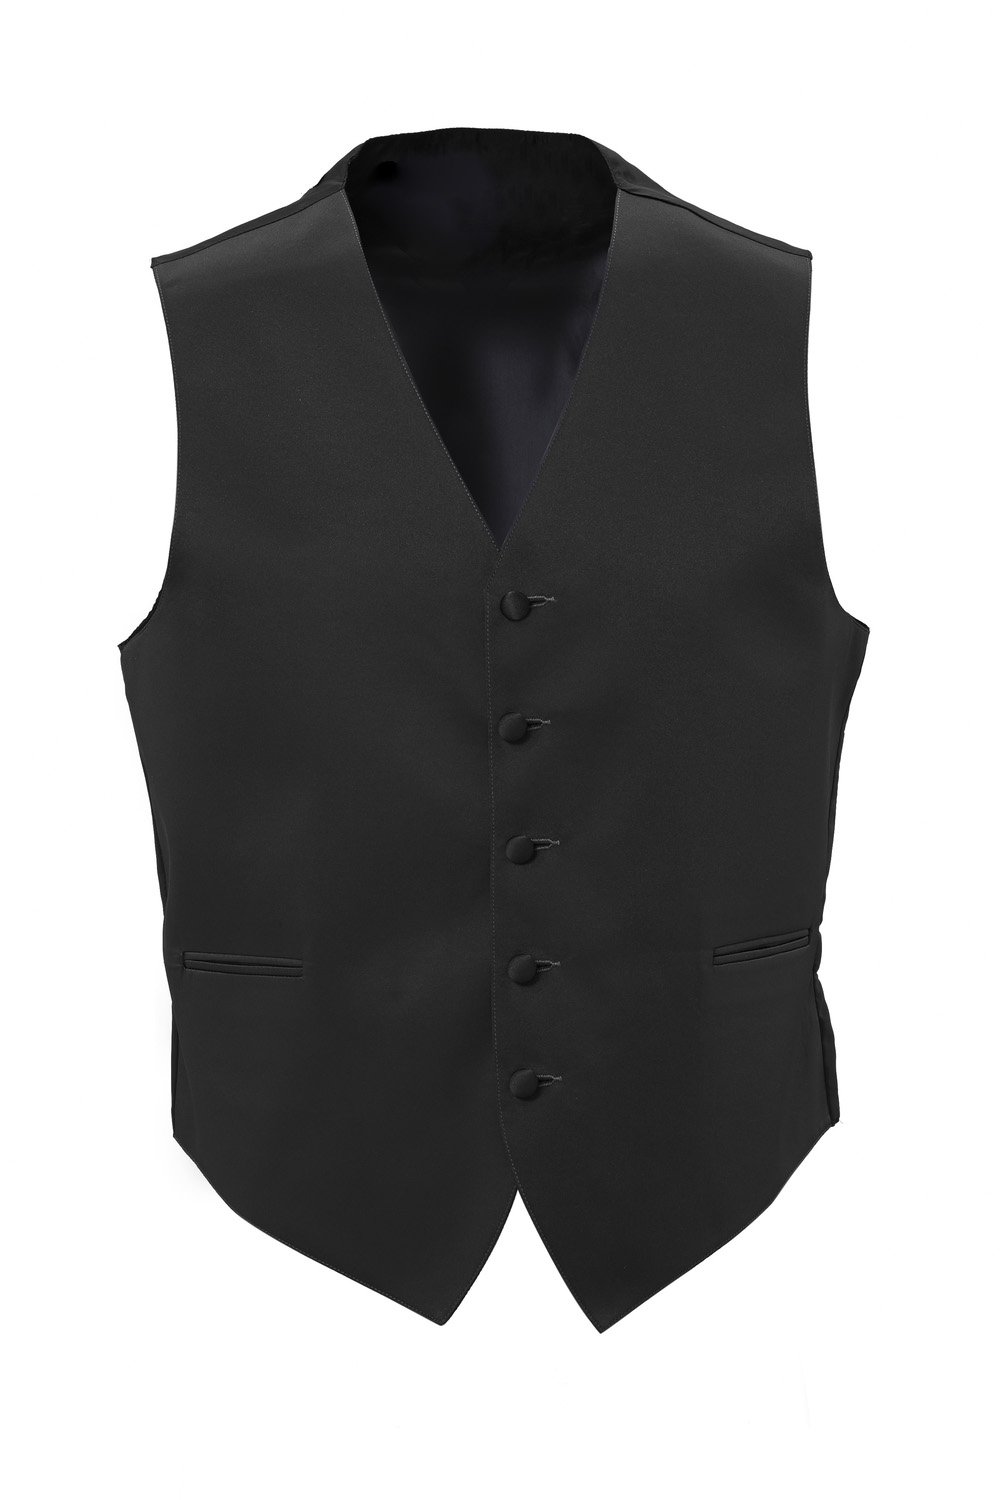 Classic Collection Black Satin Tuxedo Vest